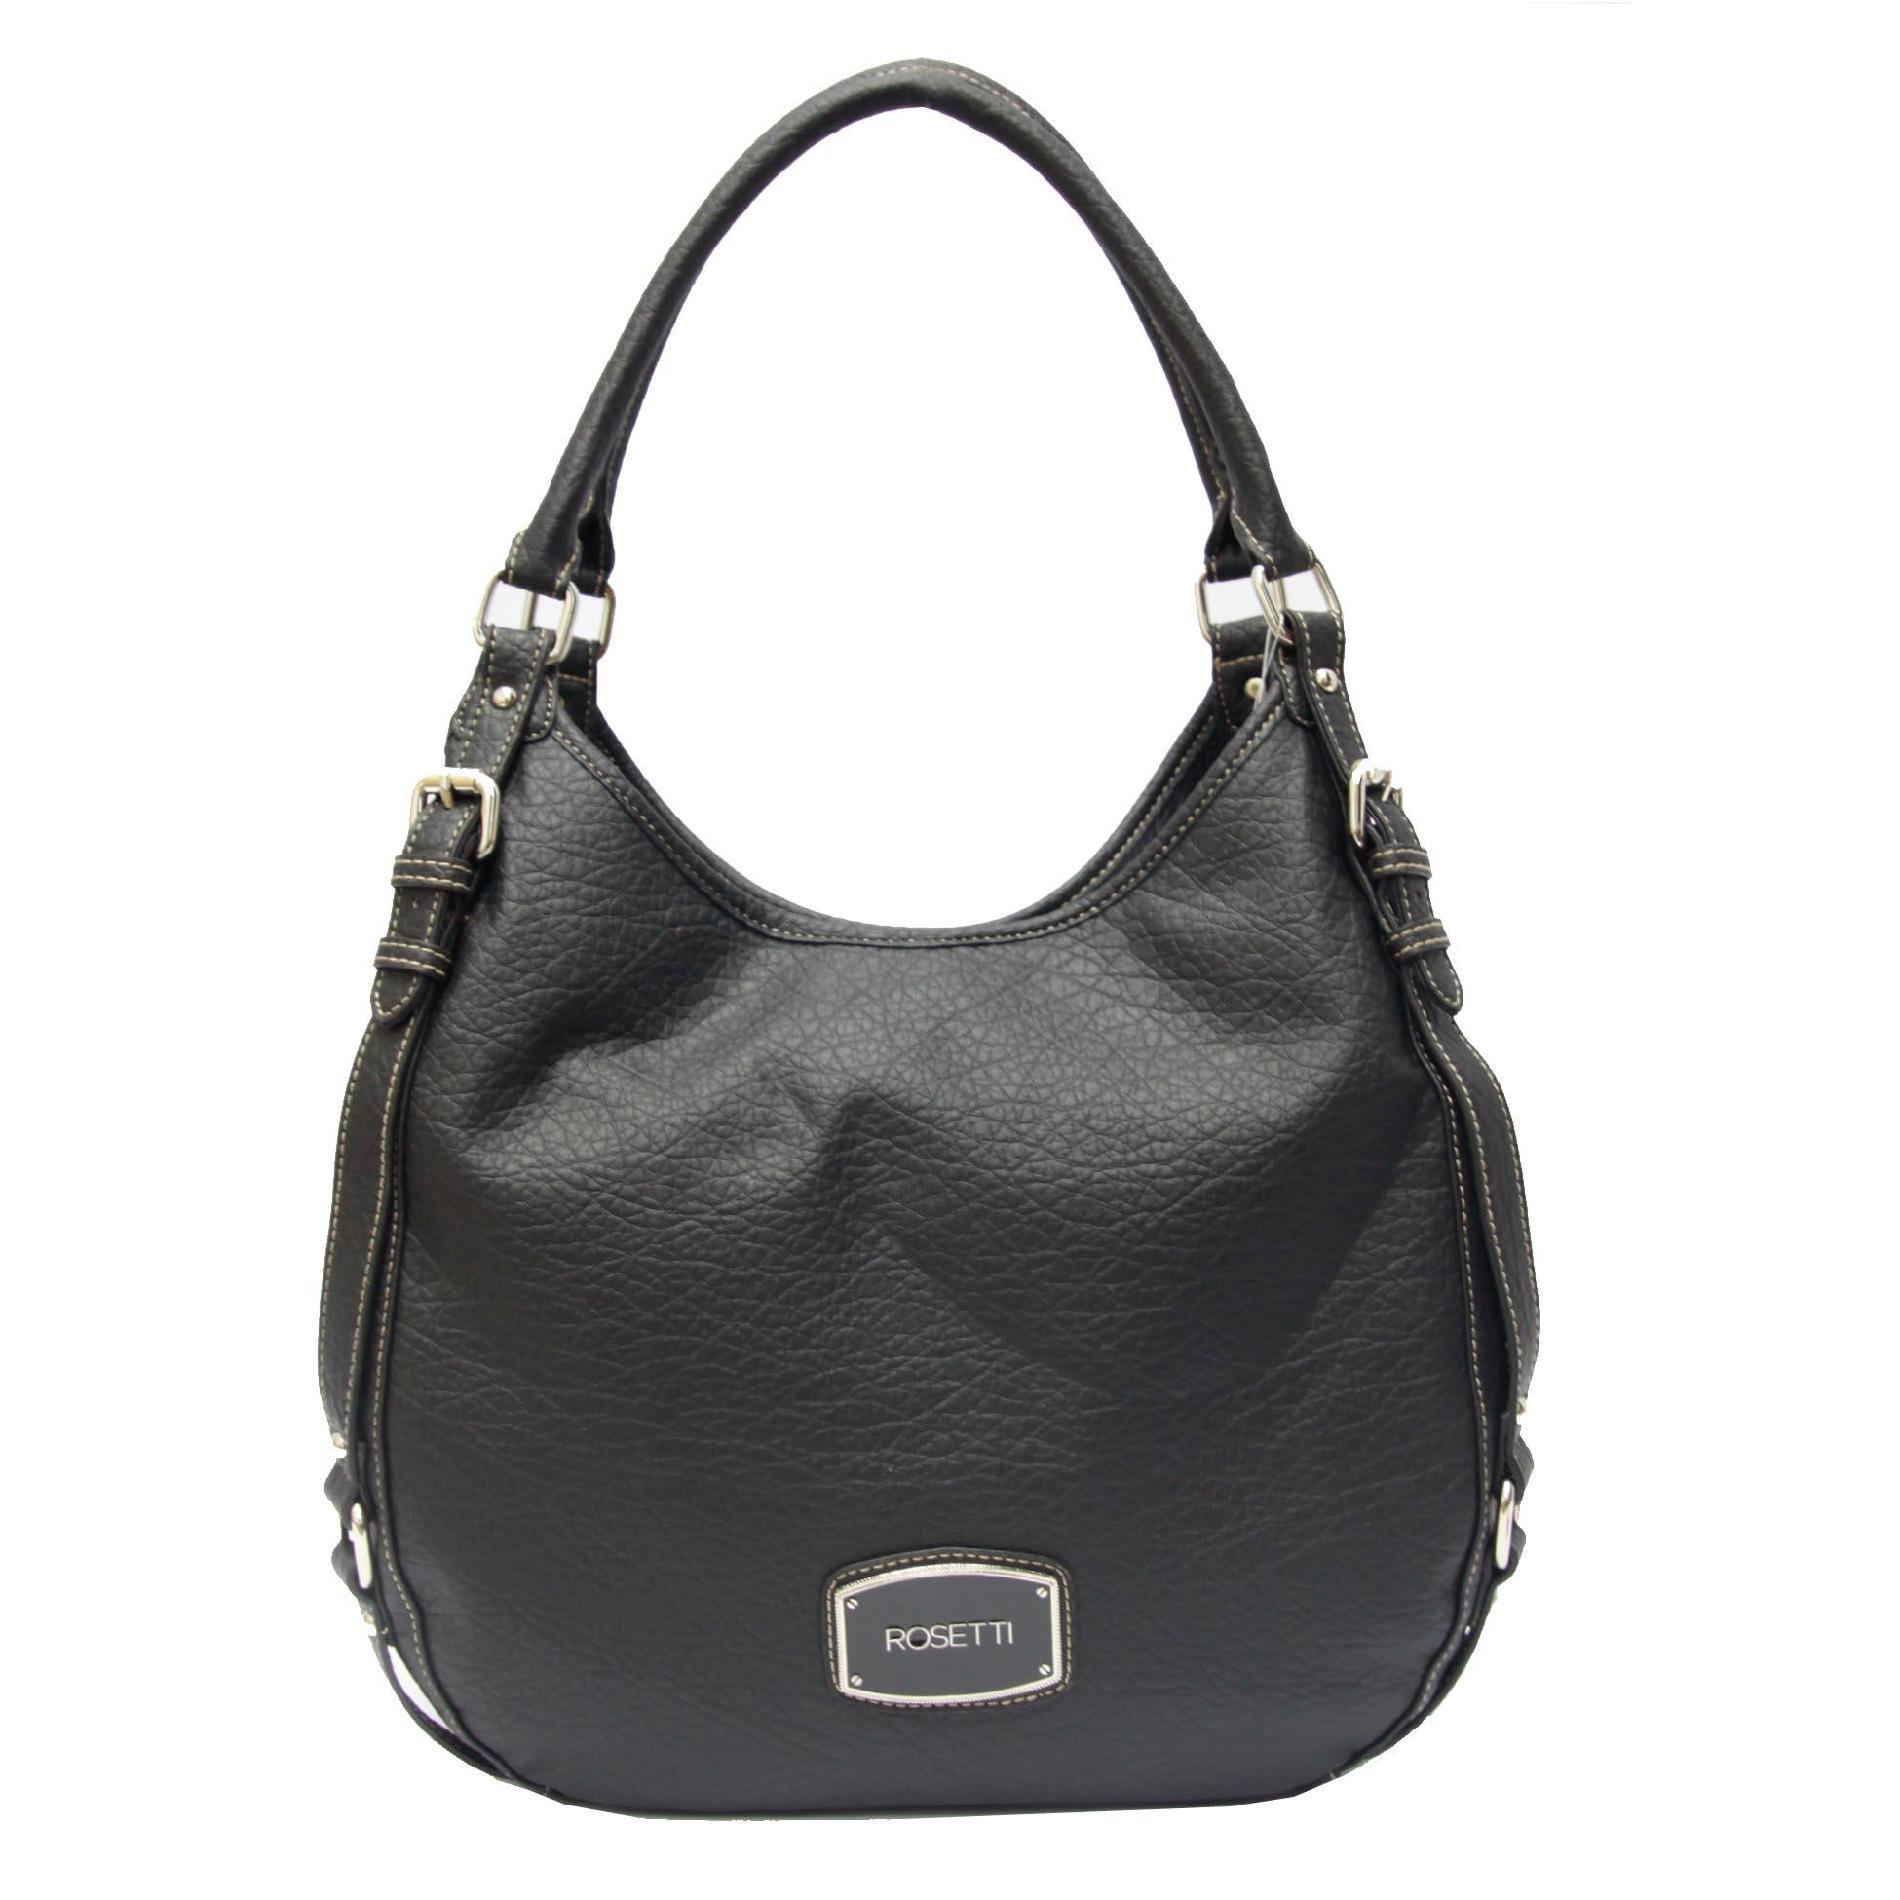 Rosetti Women's Pure & Simple Hobo Bag - Faux Leather